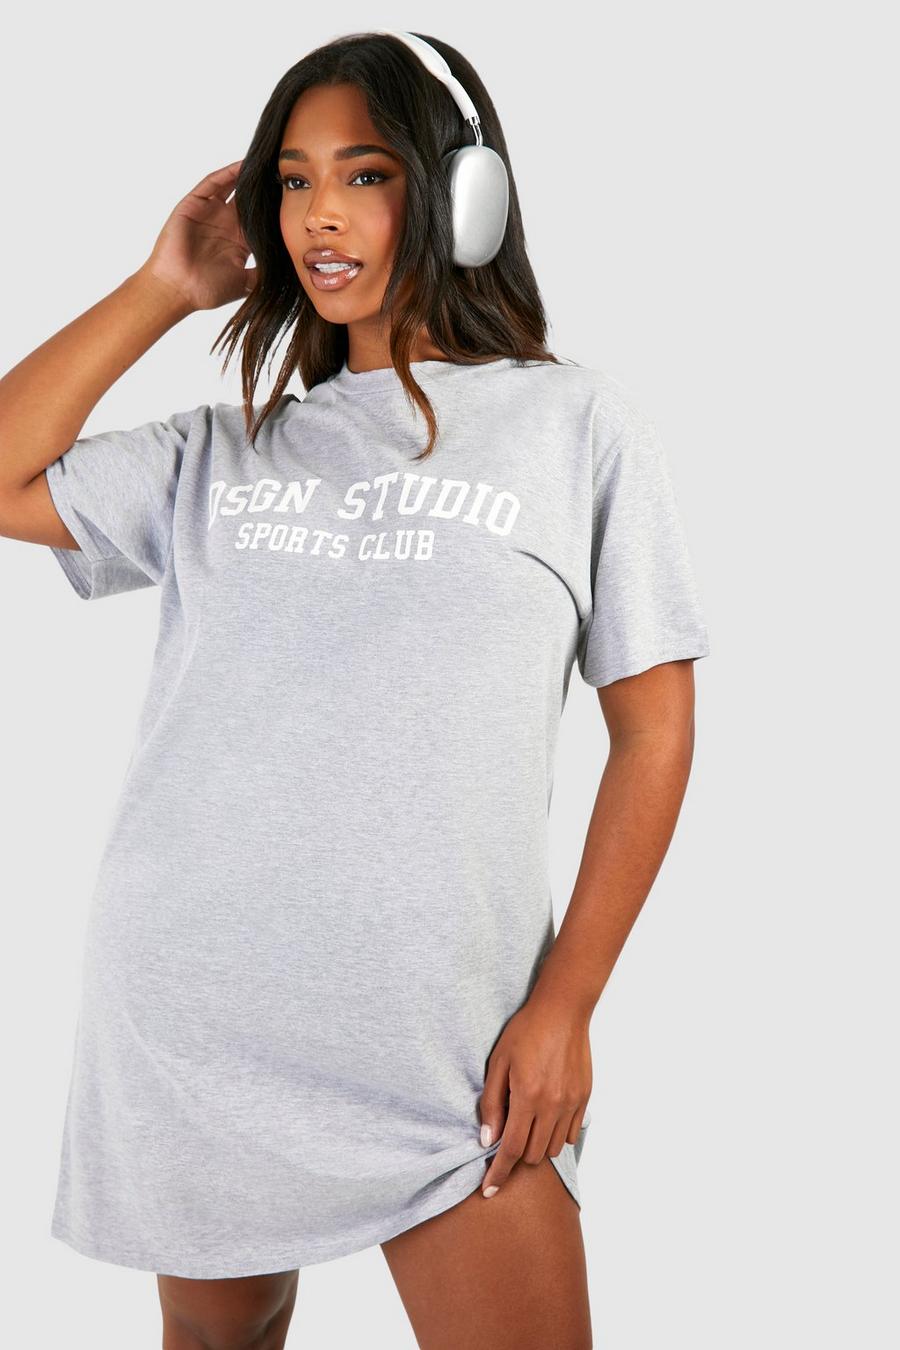 Vestito T-shirt Plus Size Dsgn Studio Sports Club, Grey marl